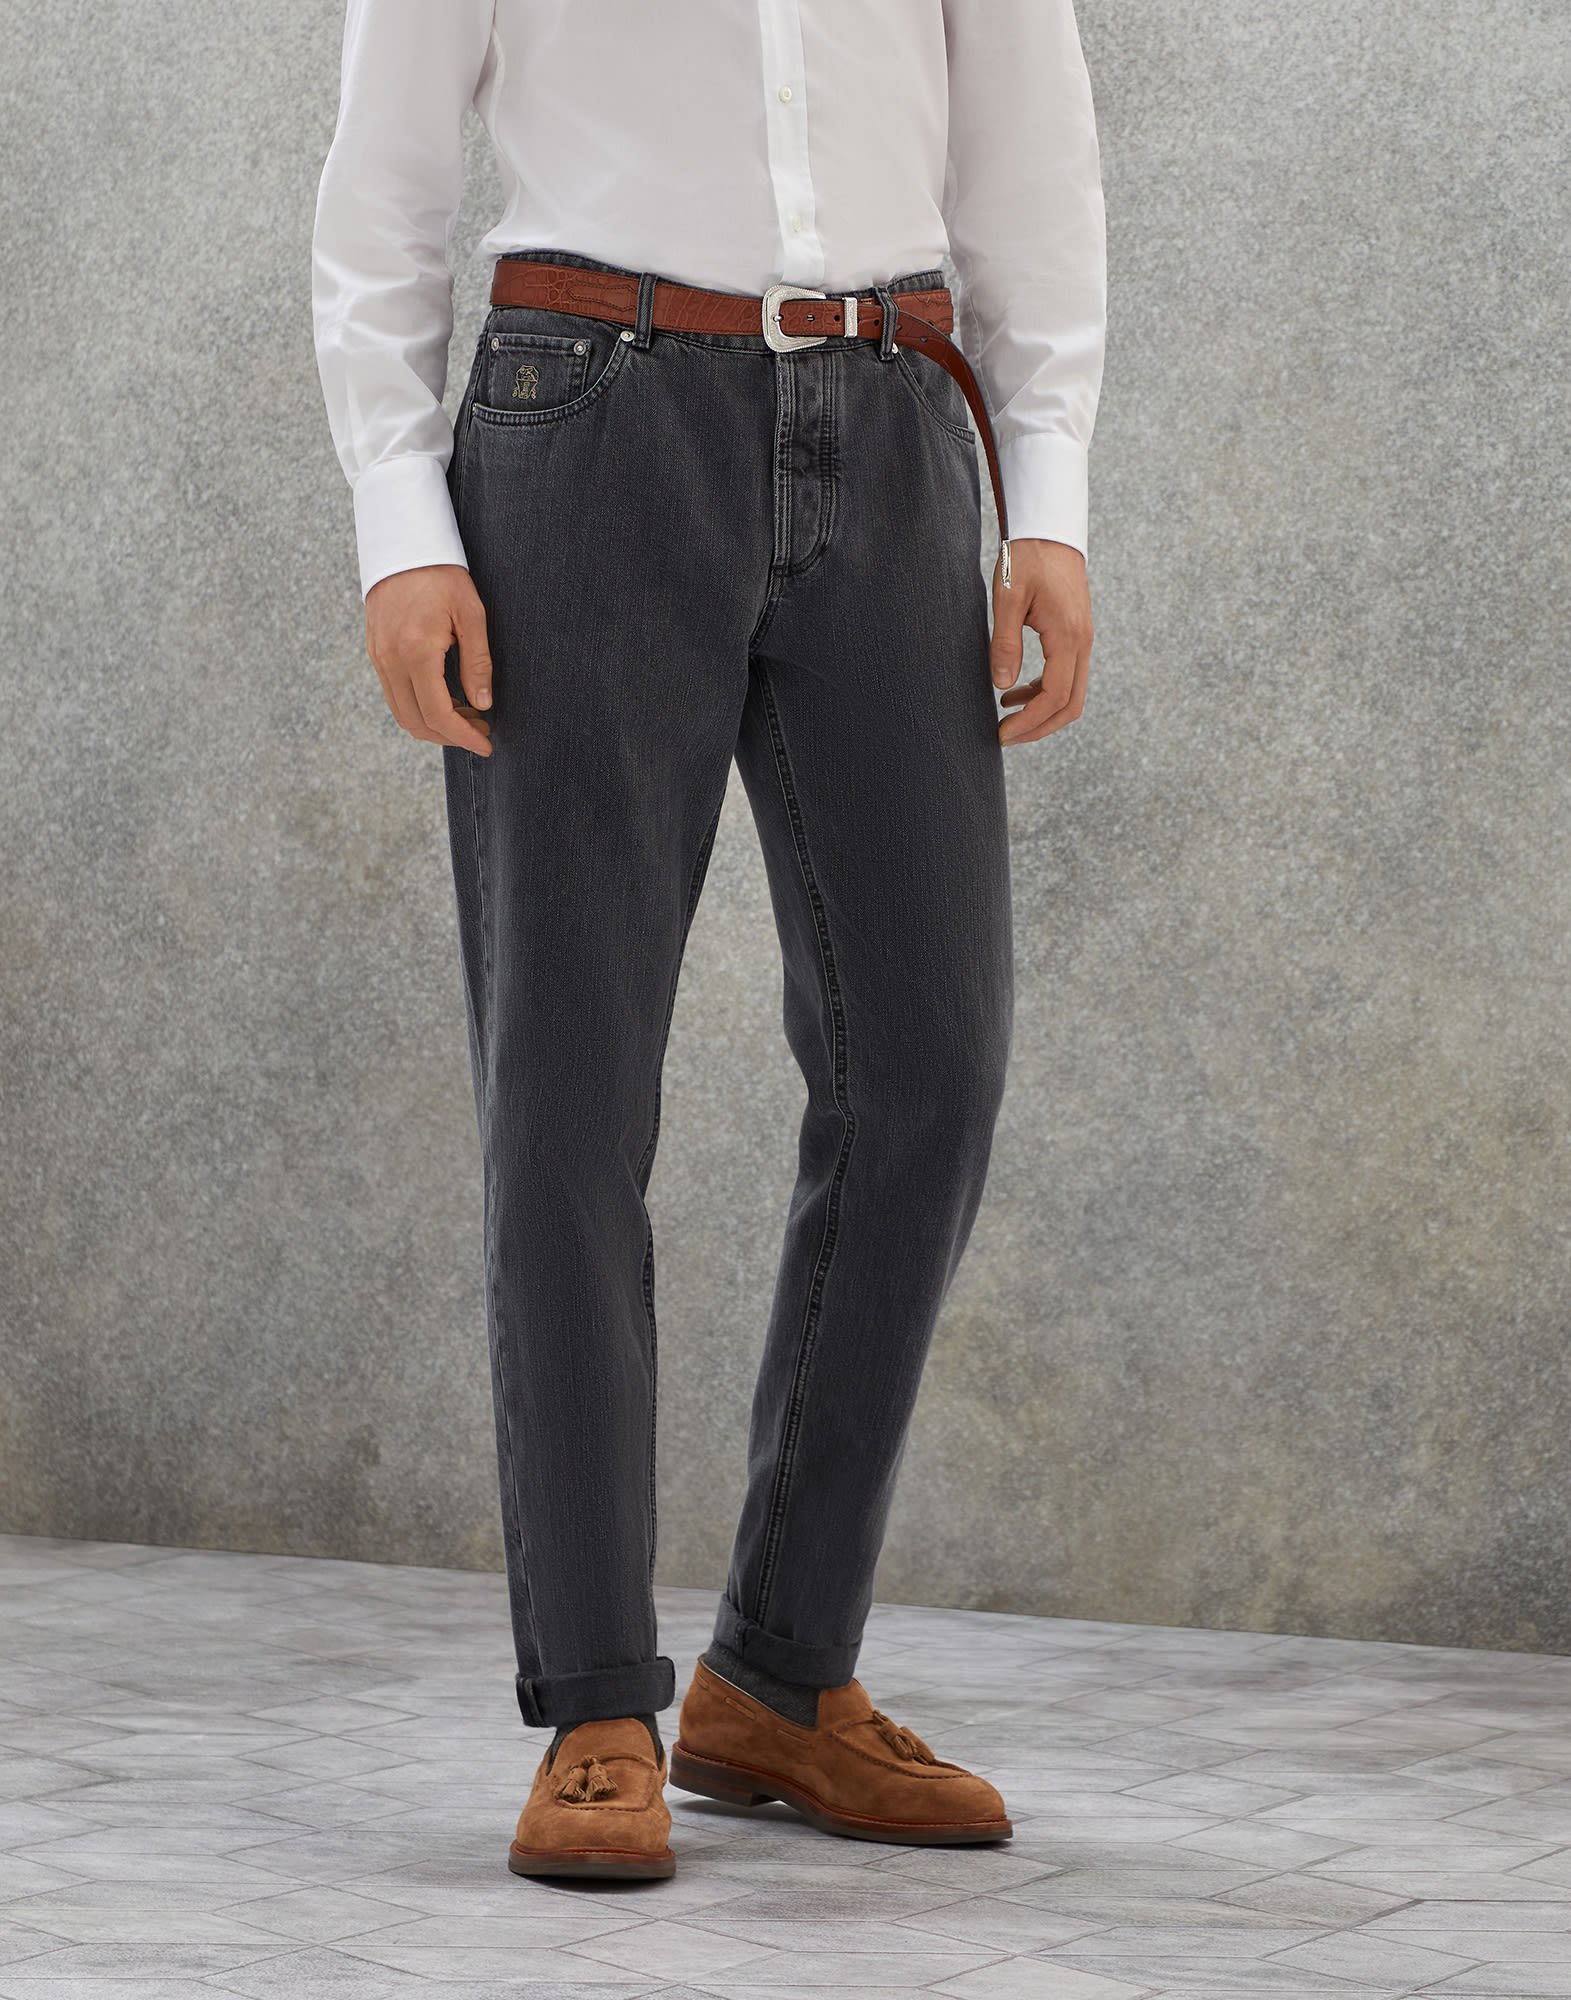 Grey denim trousers